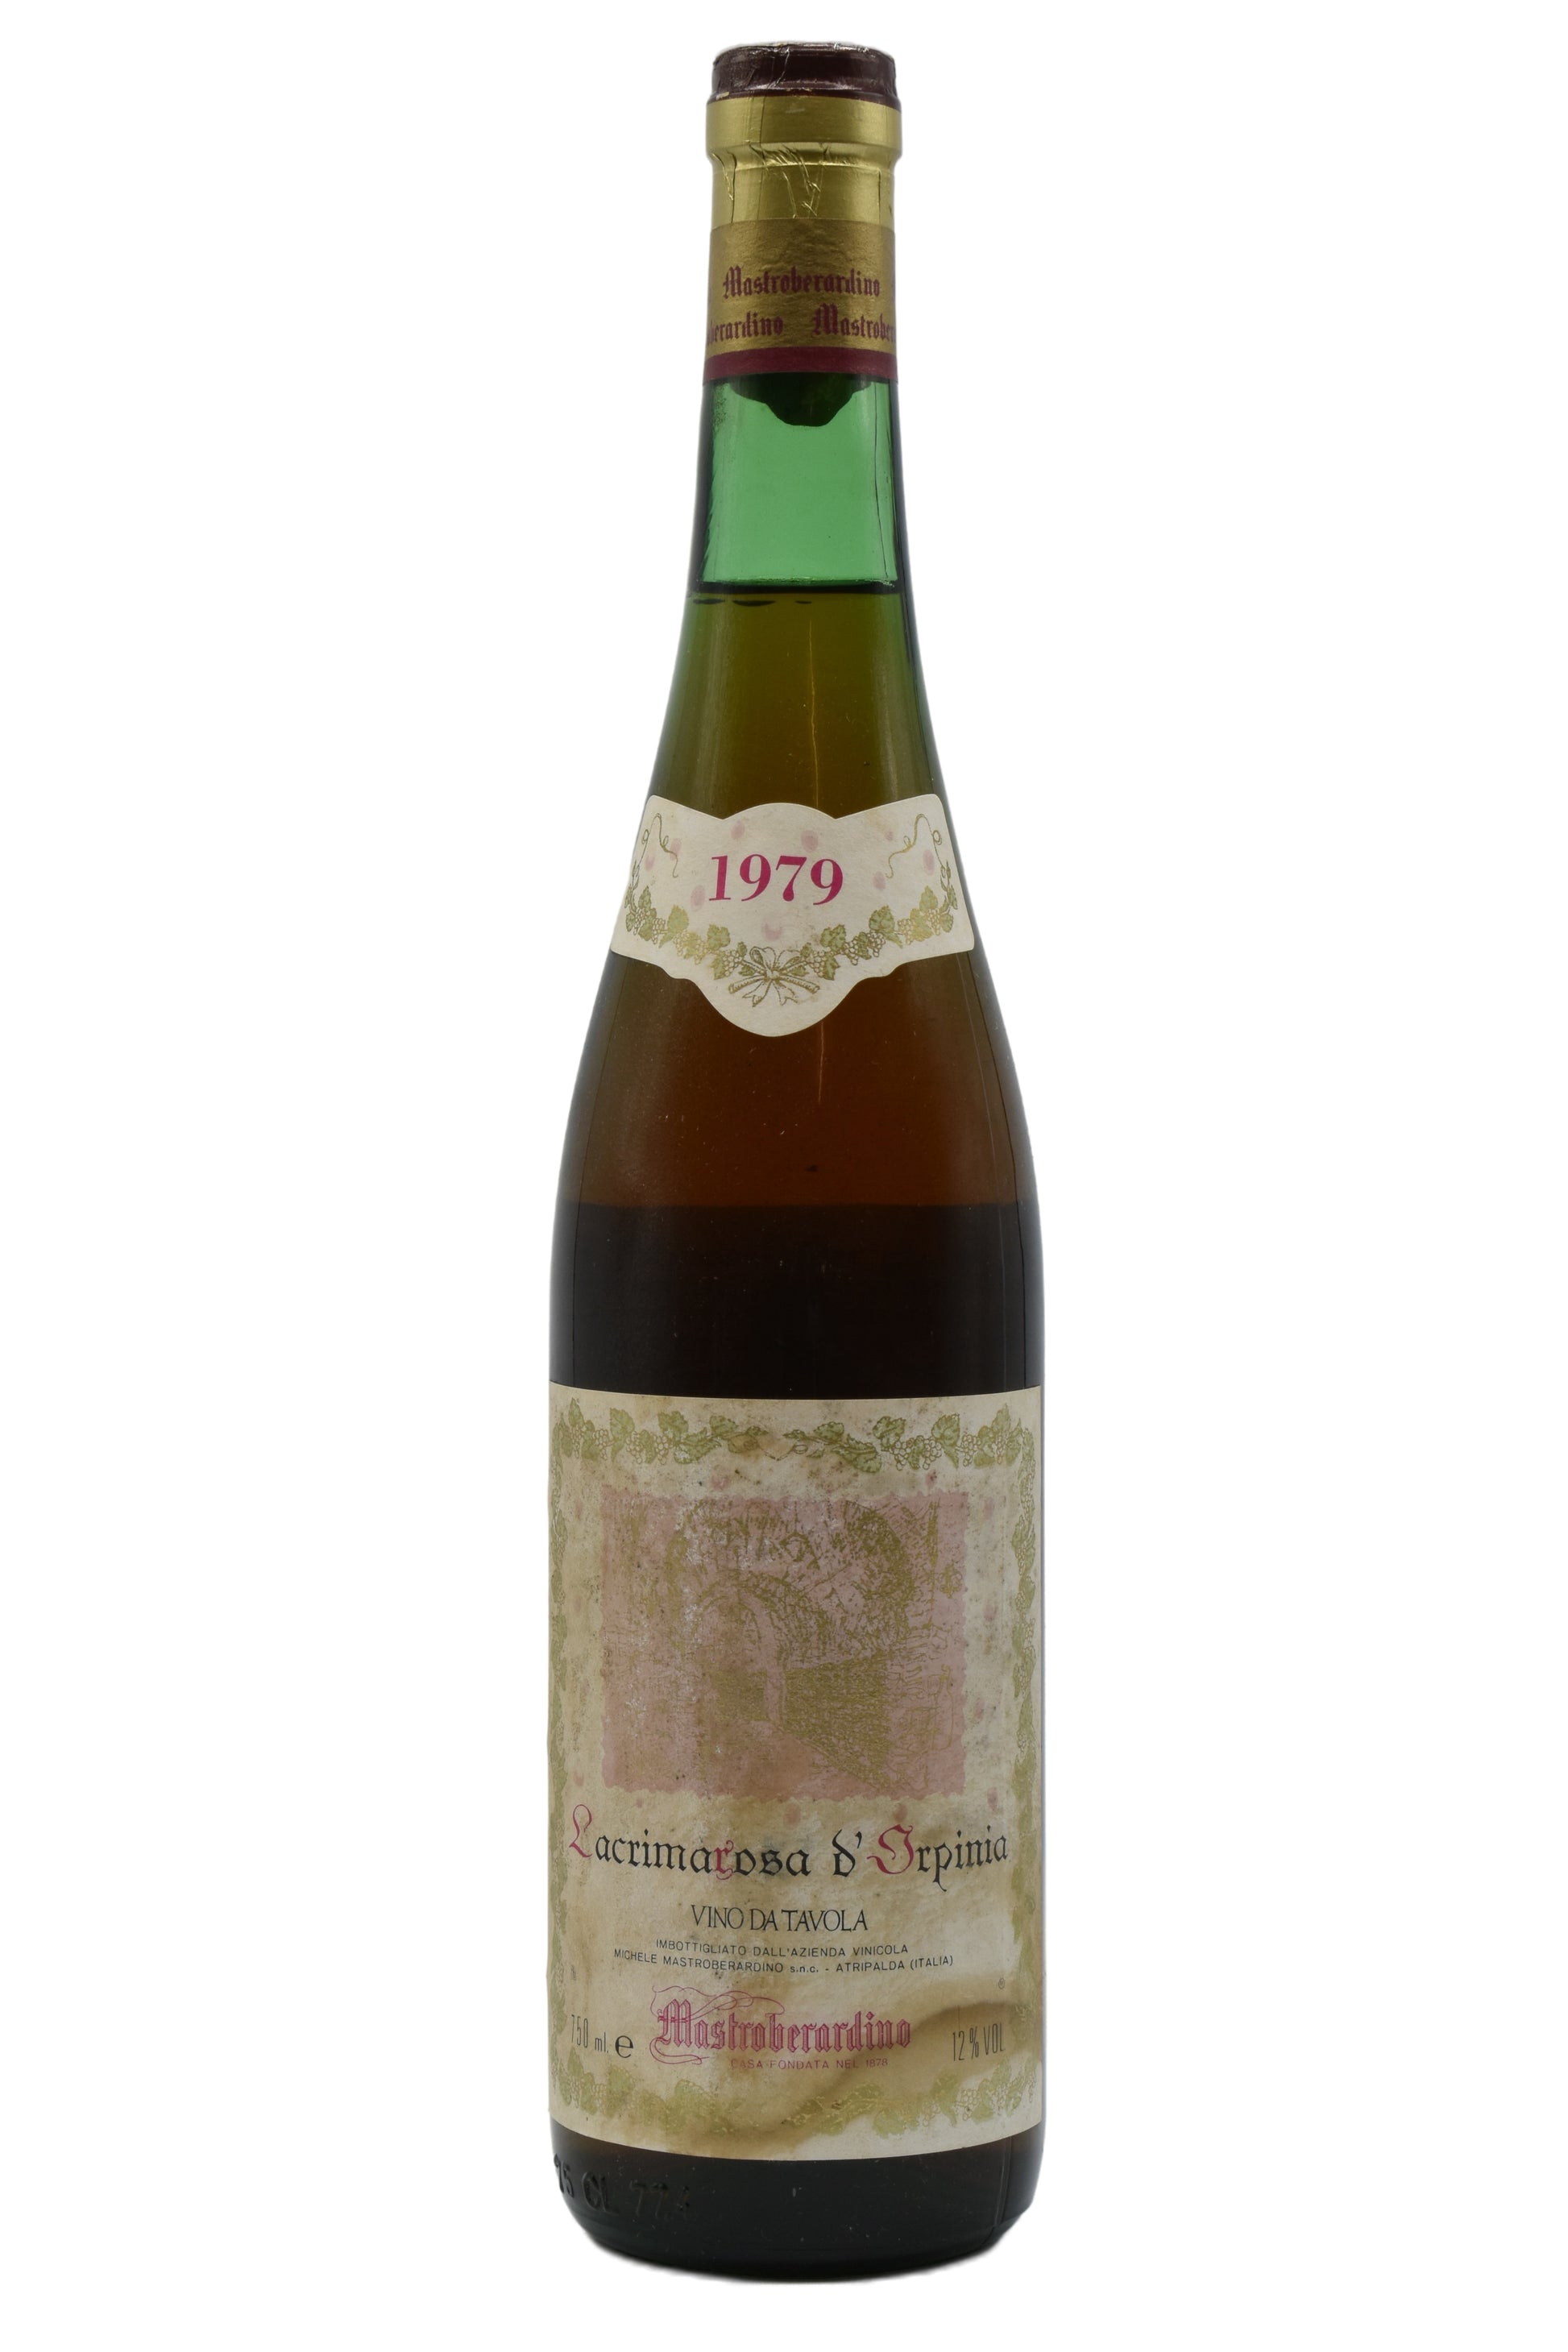 1979 Mastroberardino, Lacrimarosa d'Irpinia (rose) 750ml - Walker Wine Co.